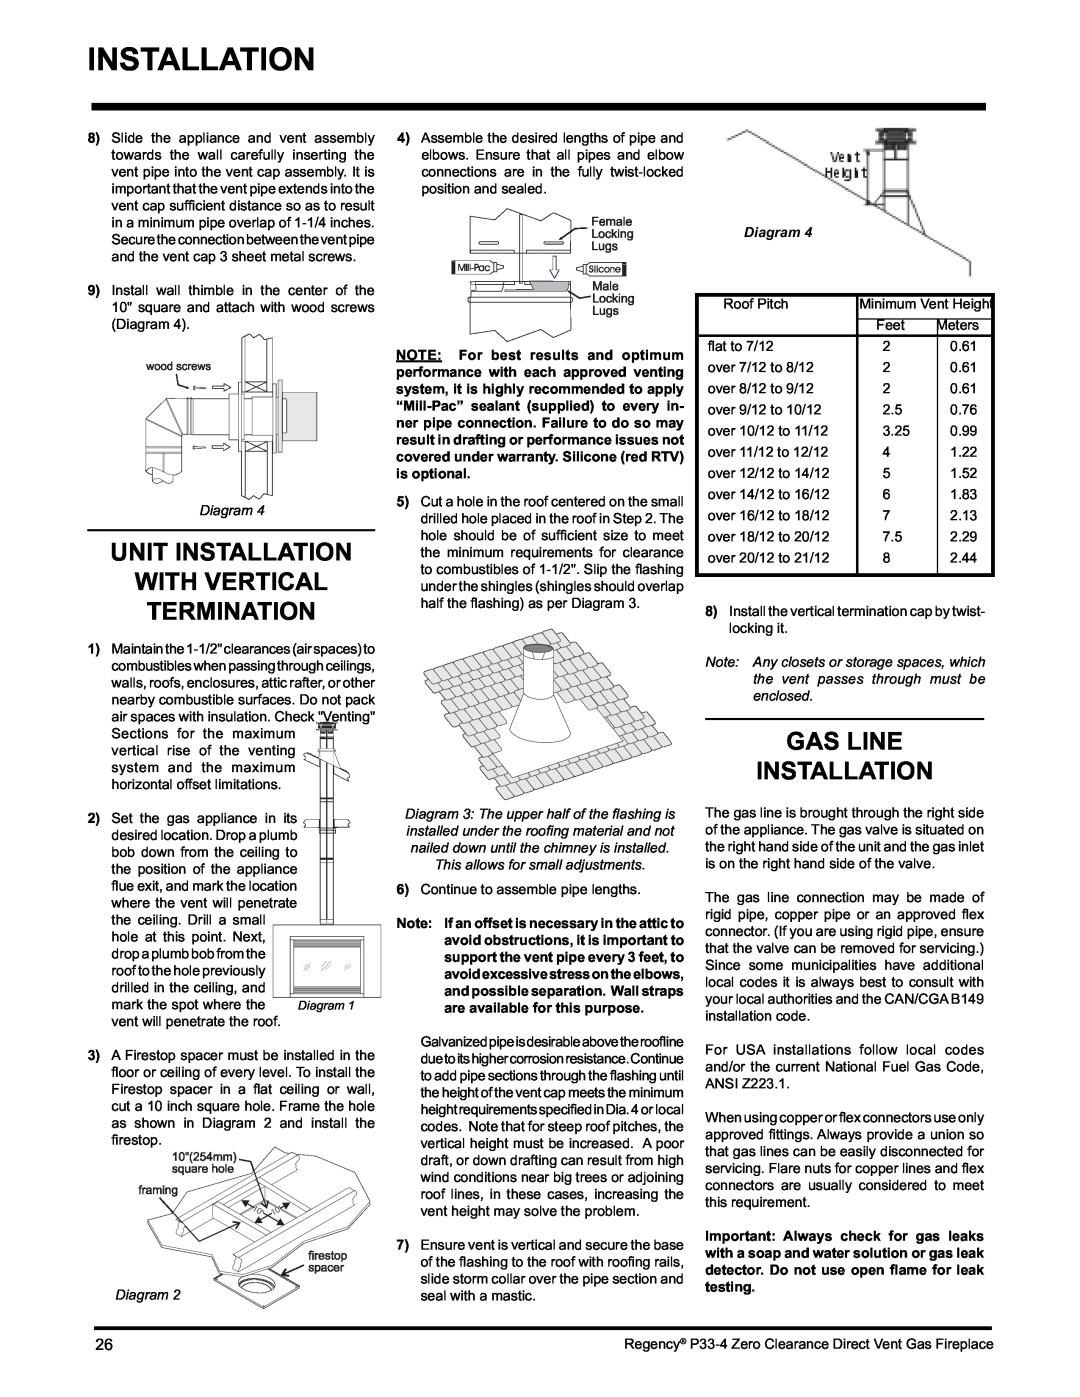 Regency P33-LP4 installation manual Unit Installation With Vertical Termination, Gas Line Installation, Diagram 